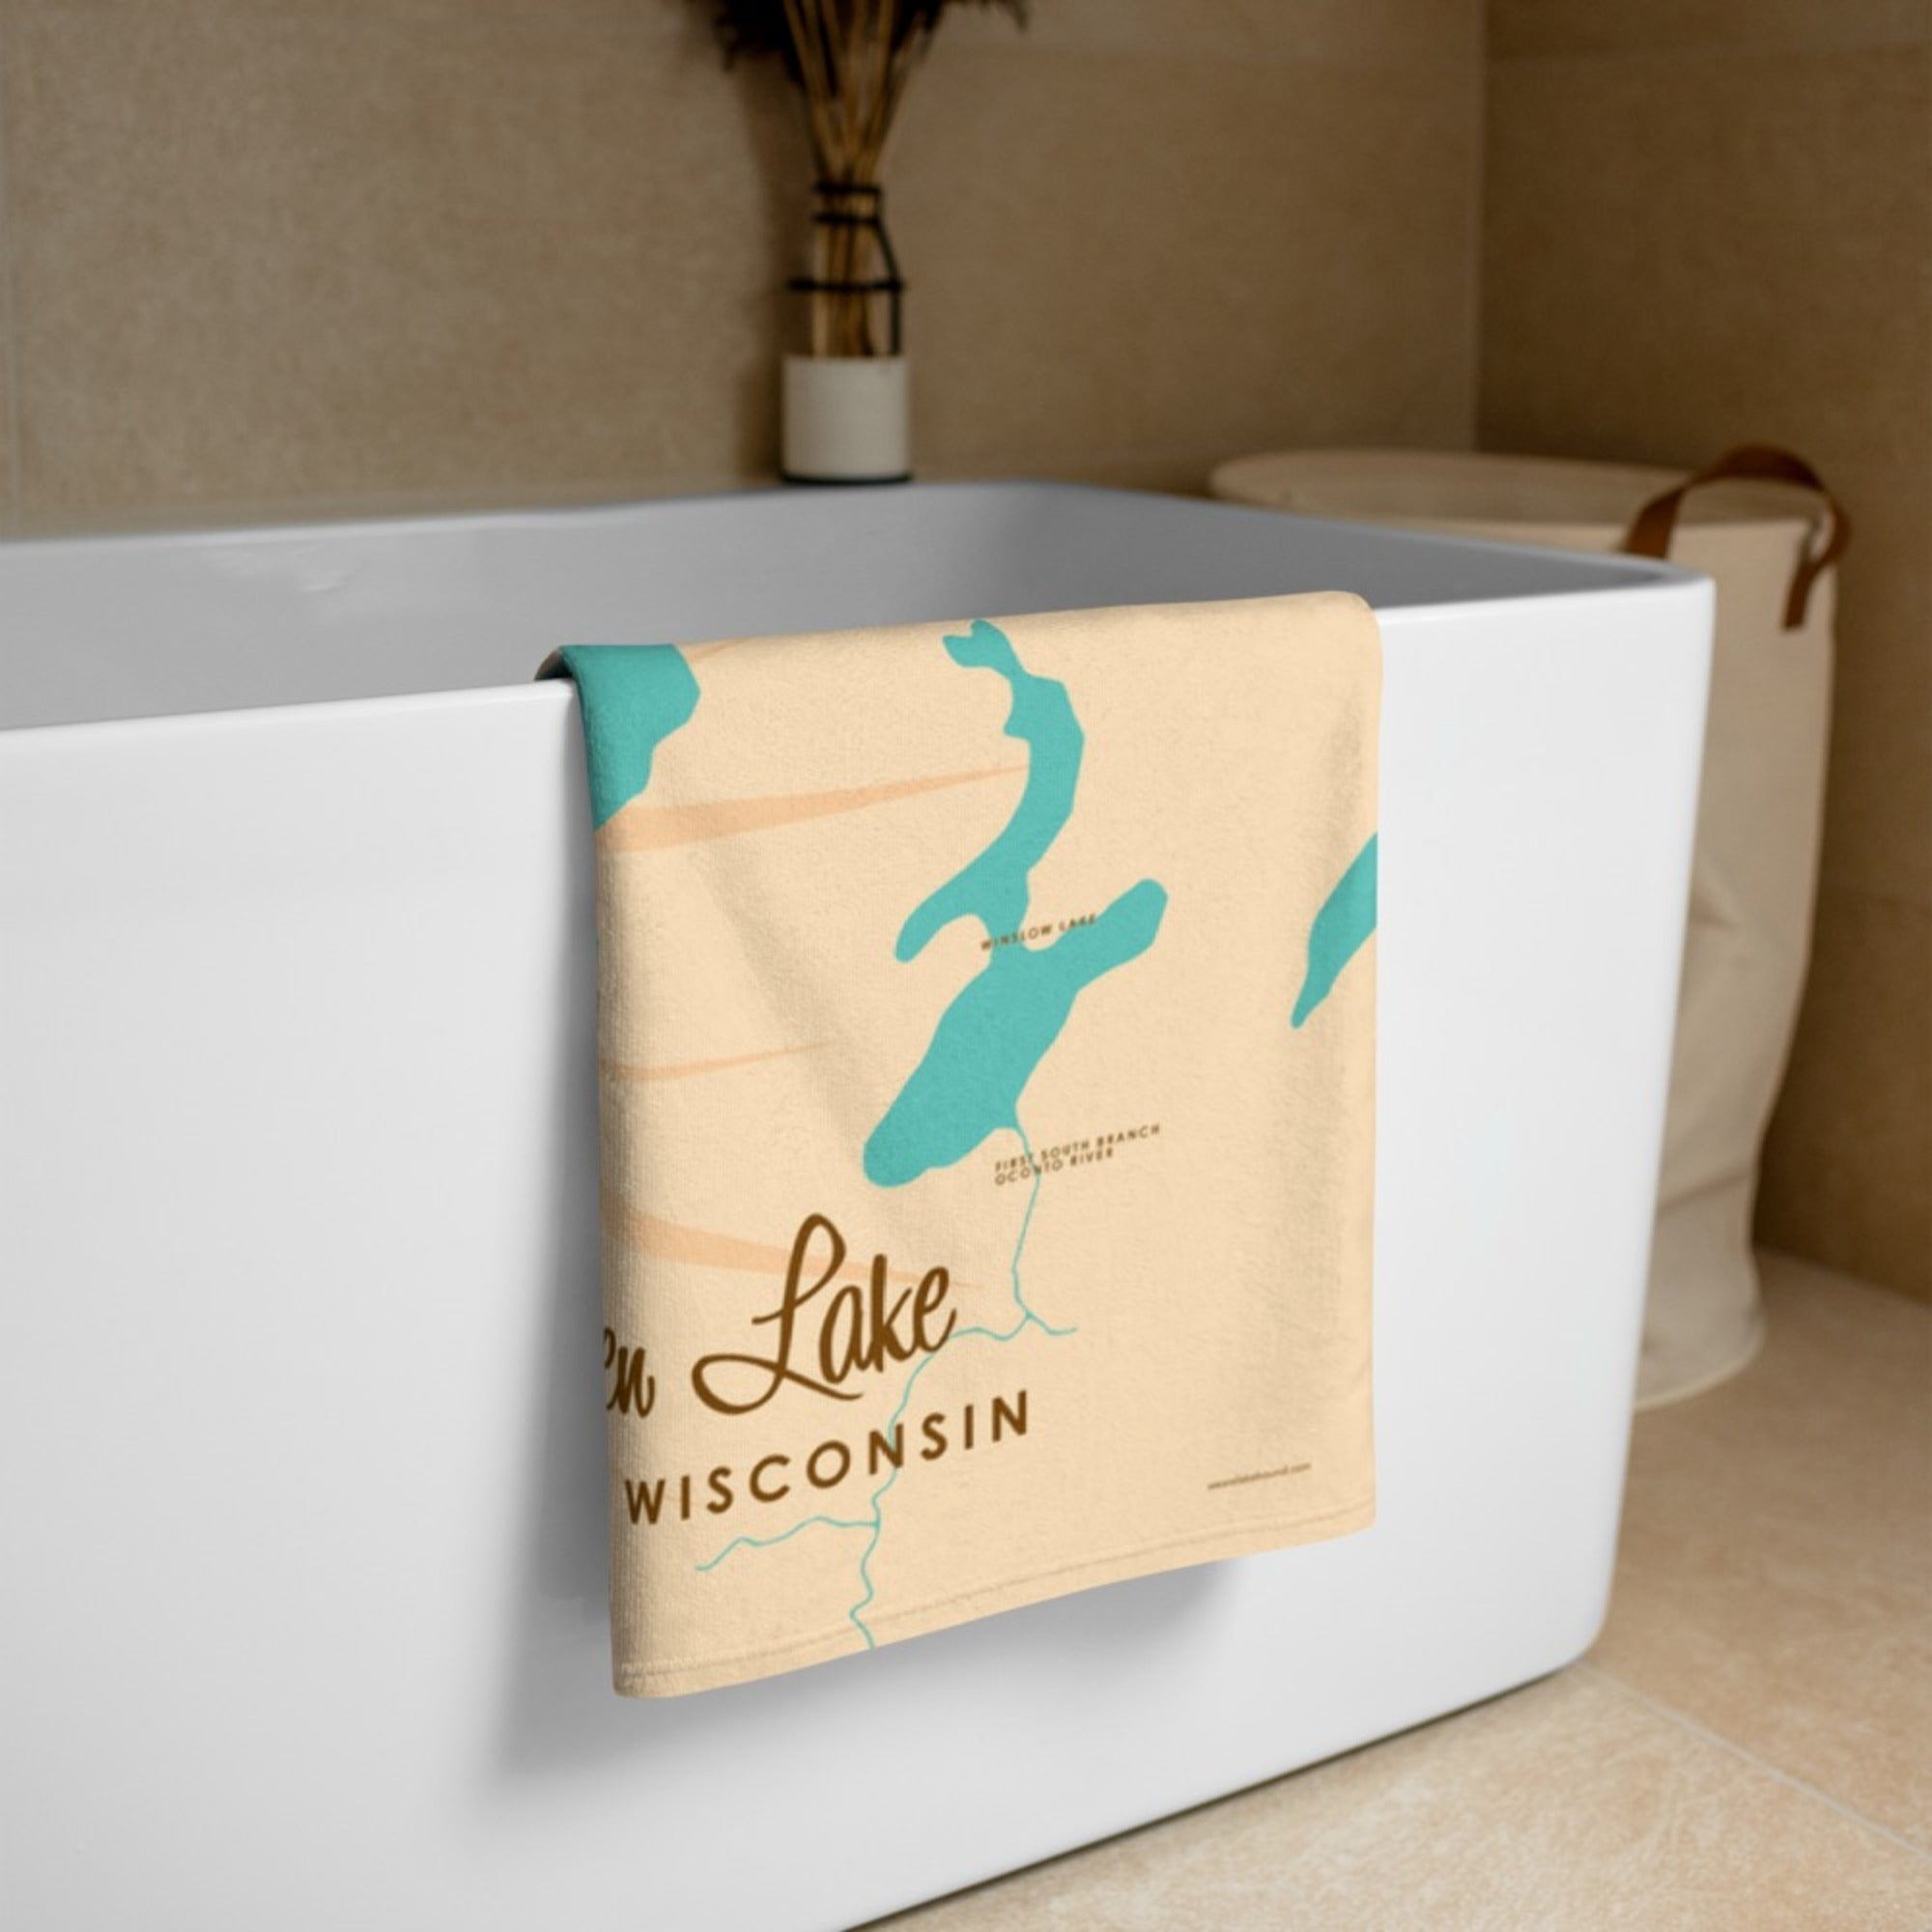 Maiden Lake Wisconsin Beach Towel